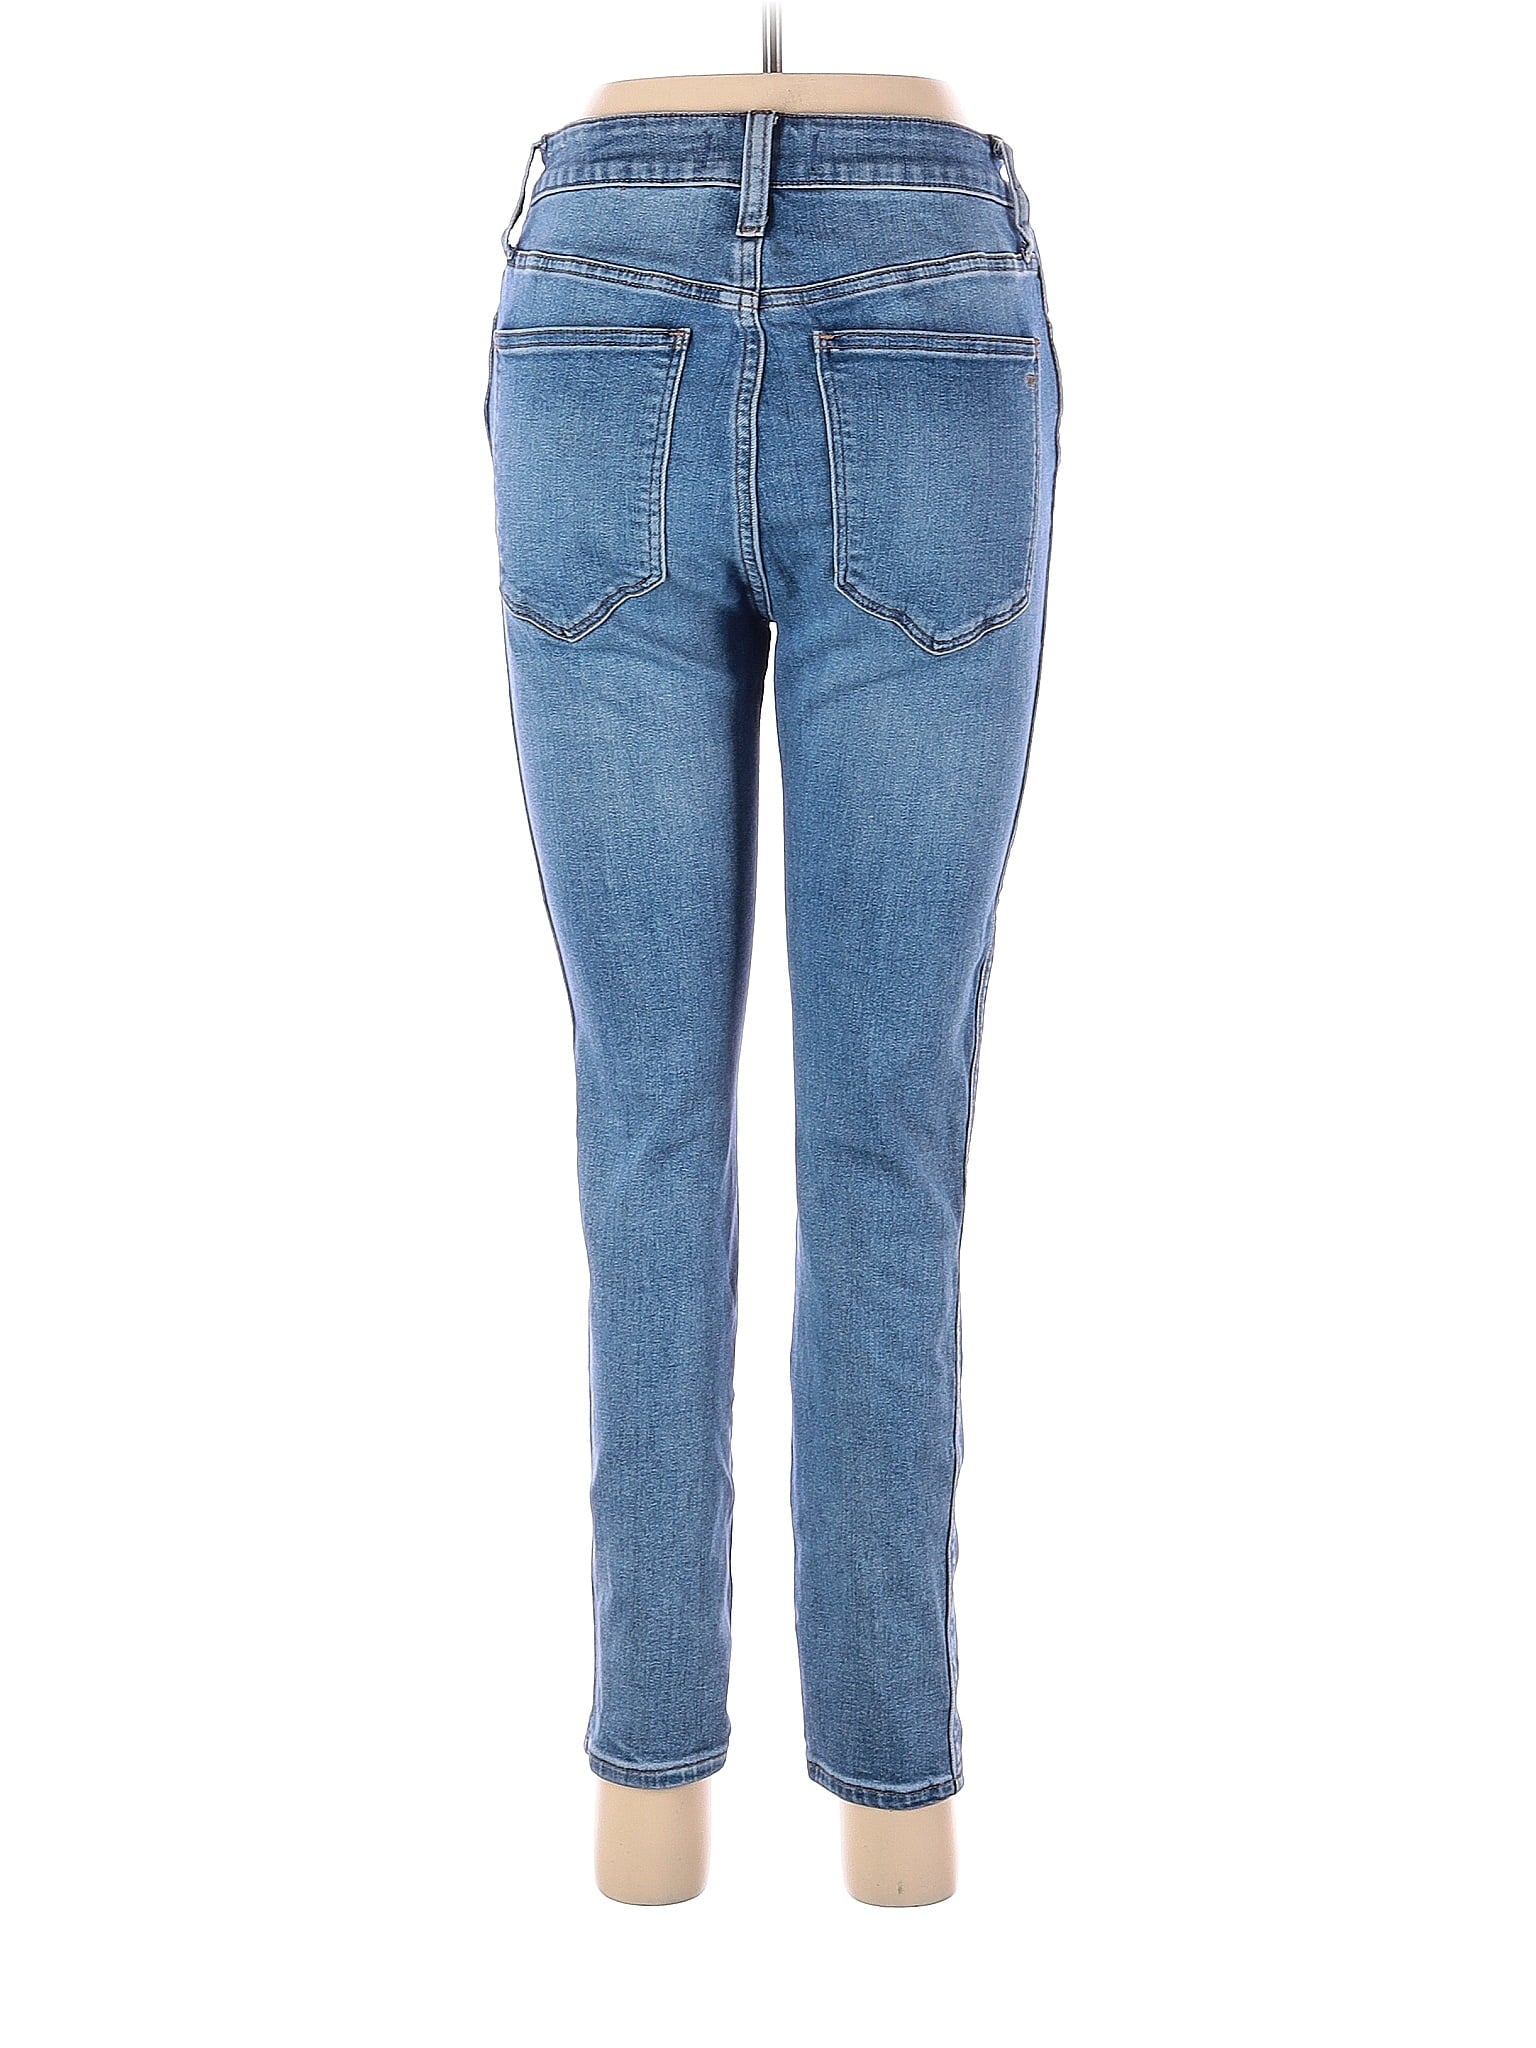 High-Rise Boyjeans Jeans in Medium Wash waist size - 29